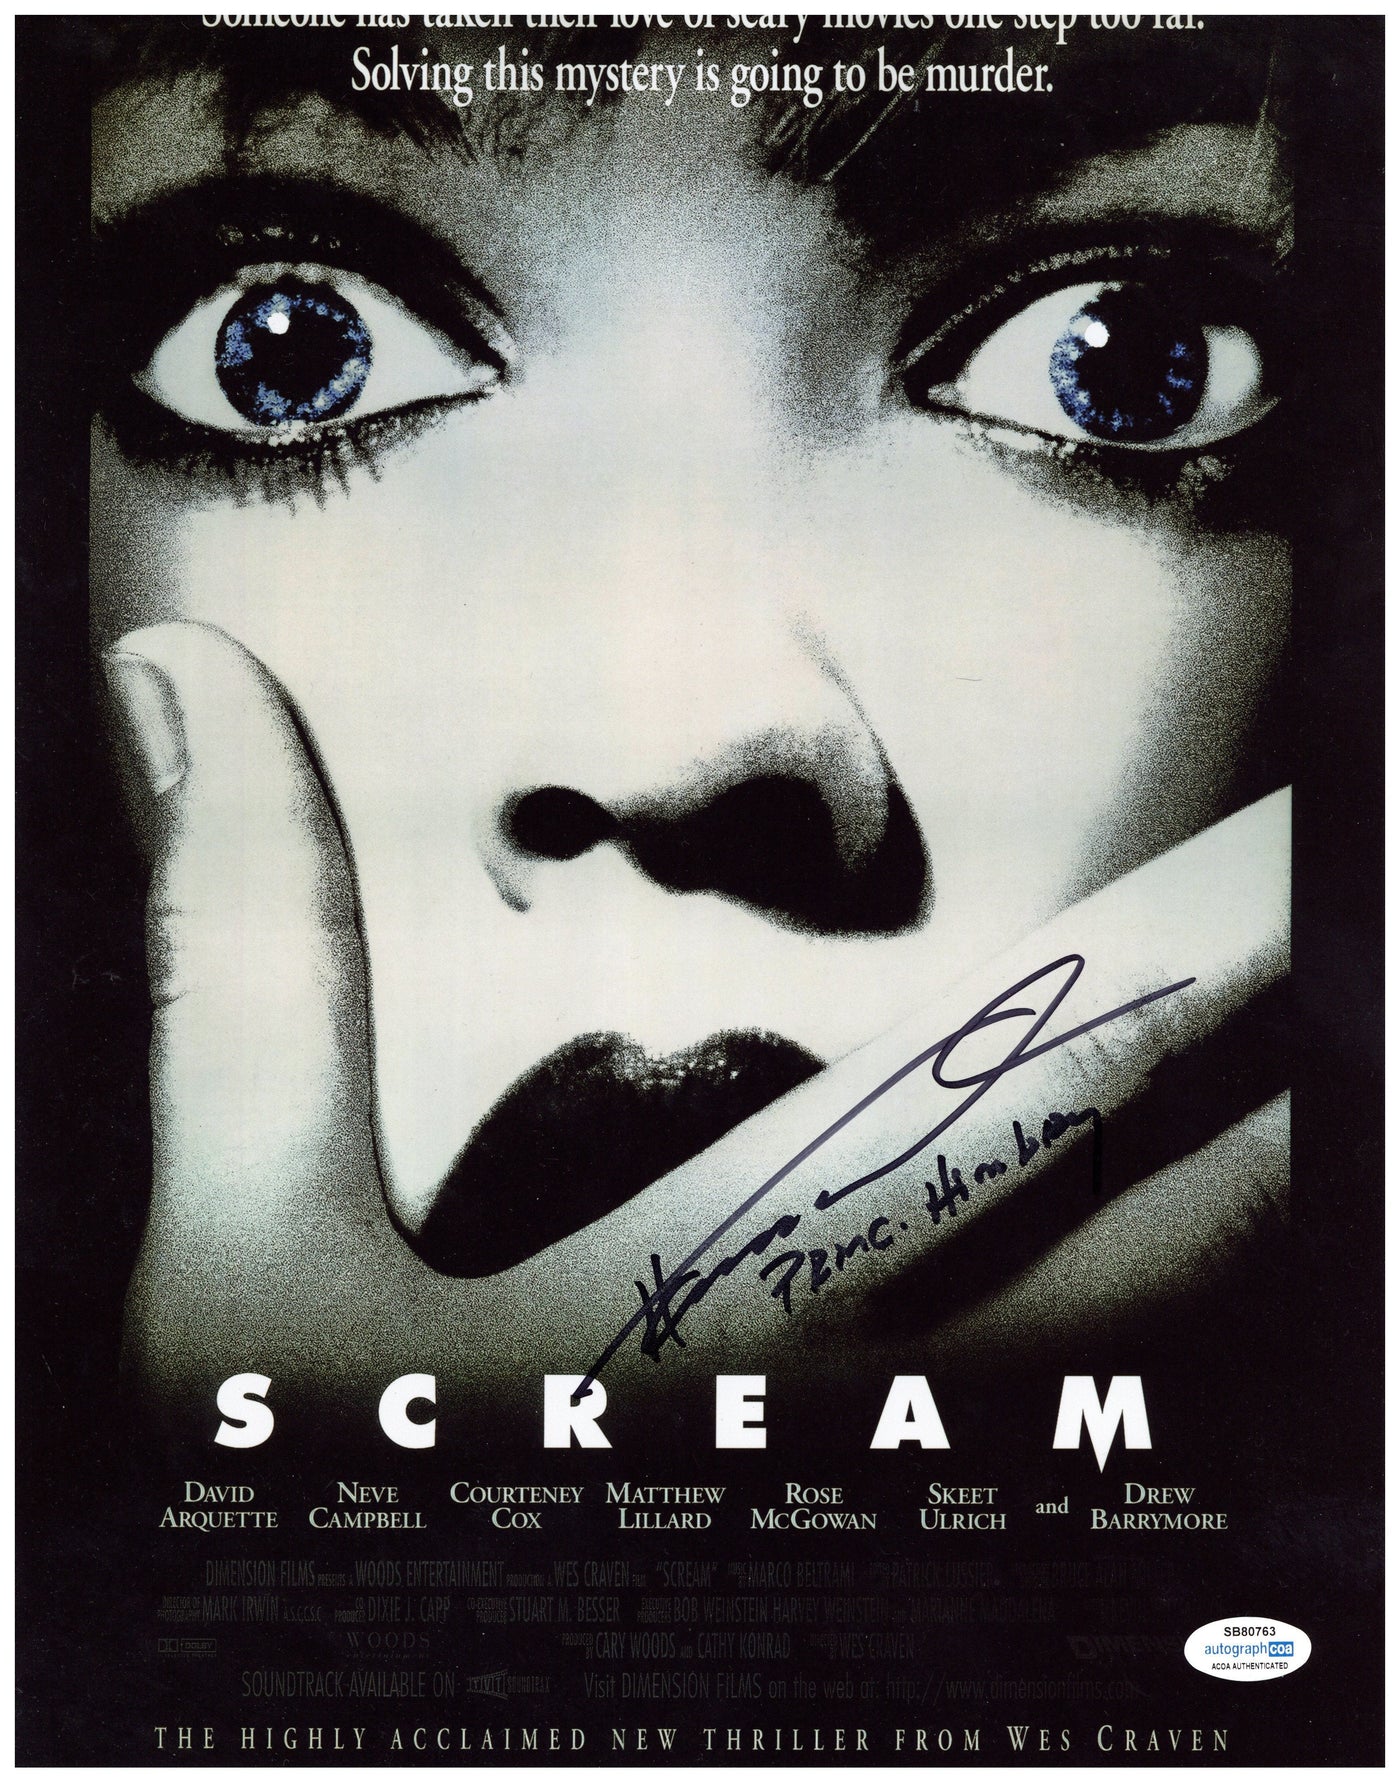 Henry Winkler Signed 11x14 Photo Scream Autographed AutographCOA